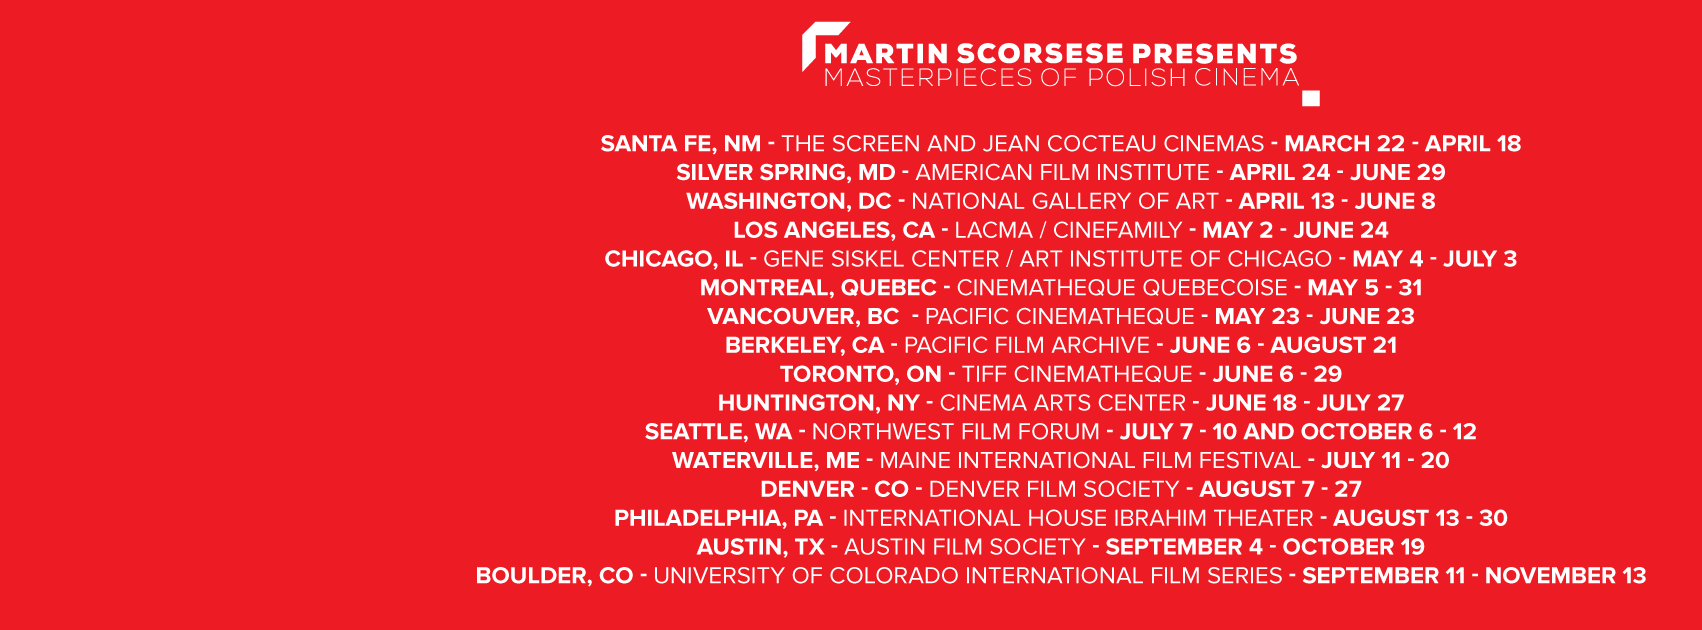 Plan projekcji "Martin Scorsese Presents"